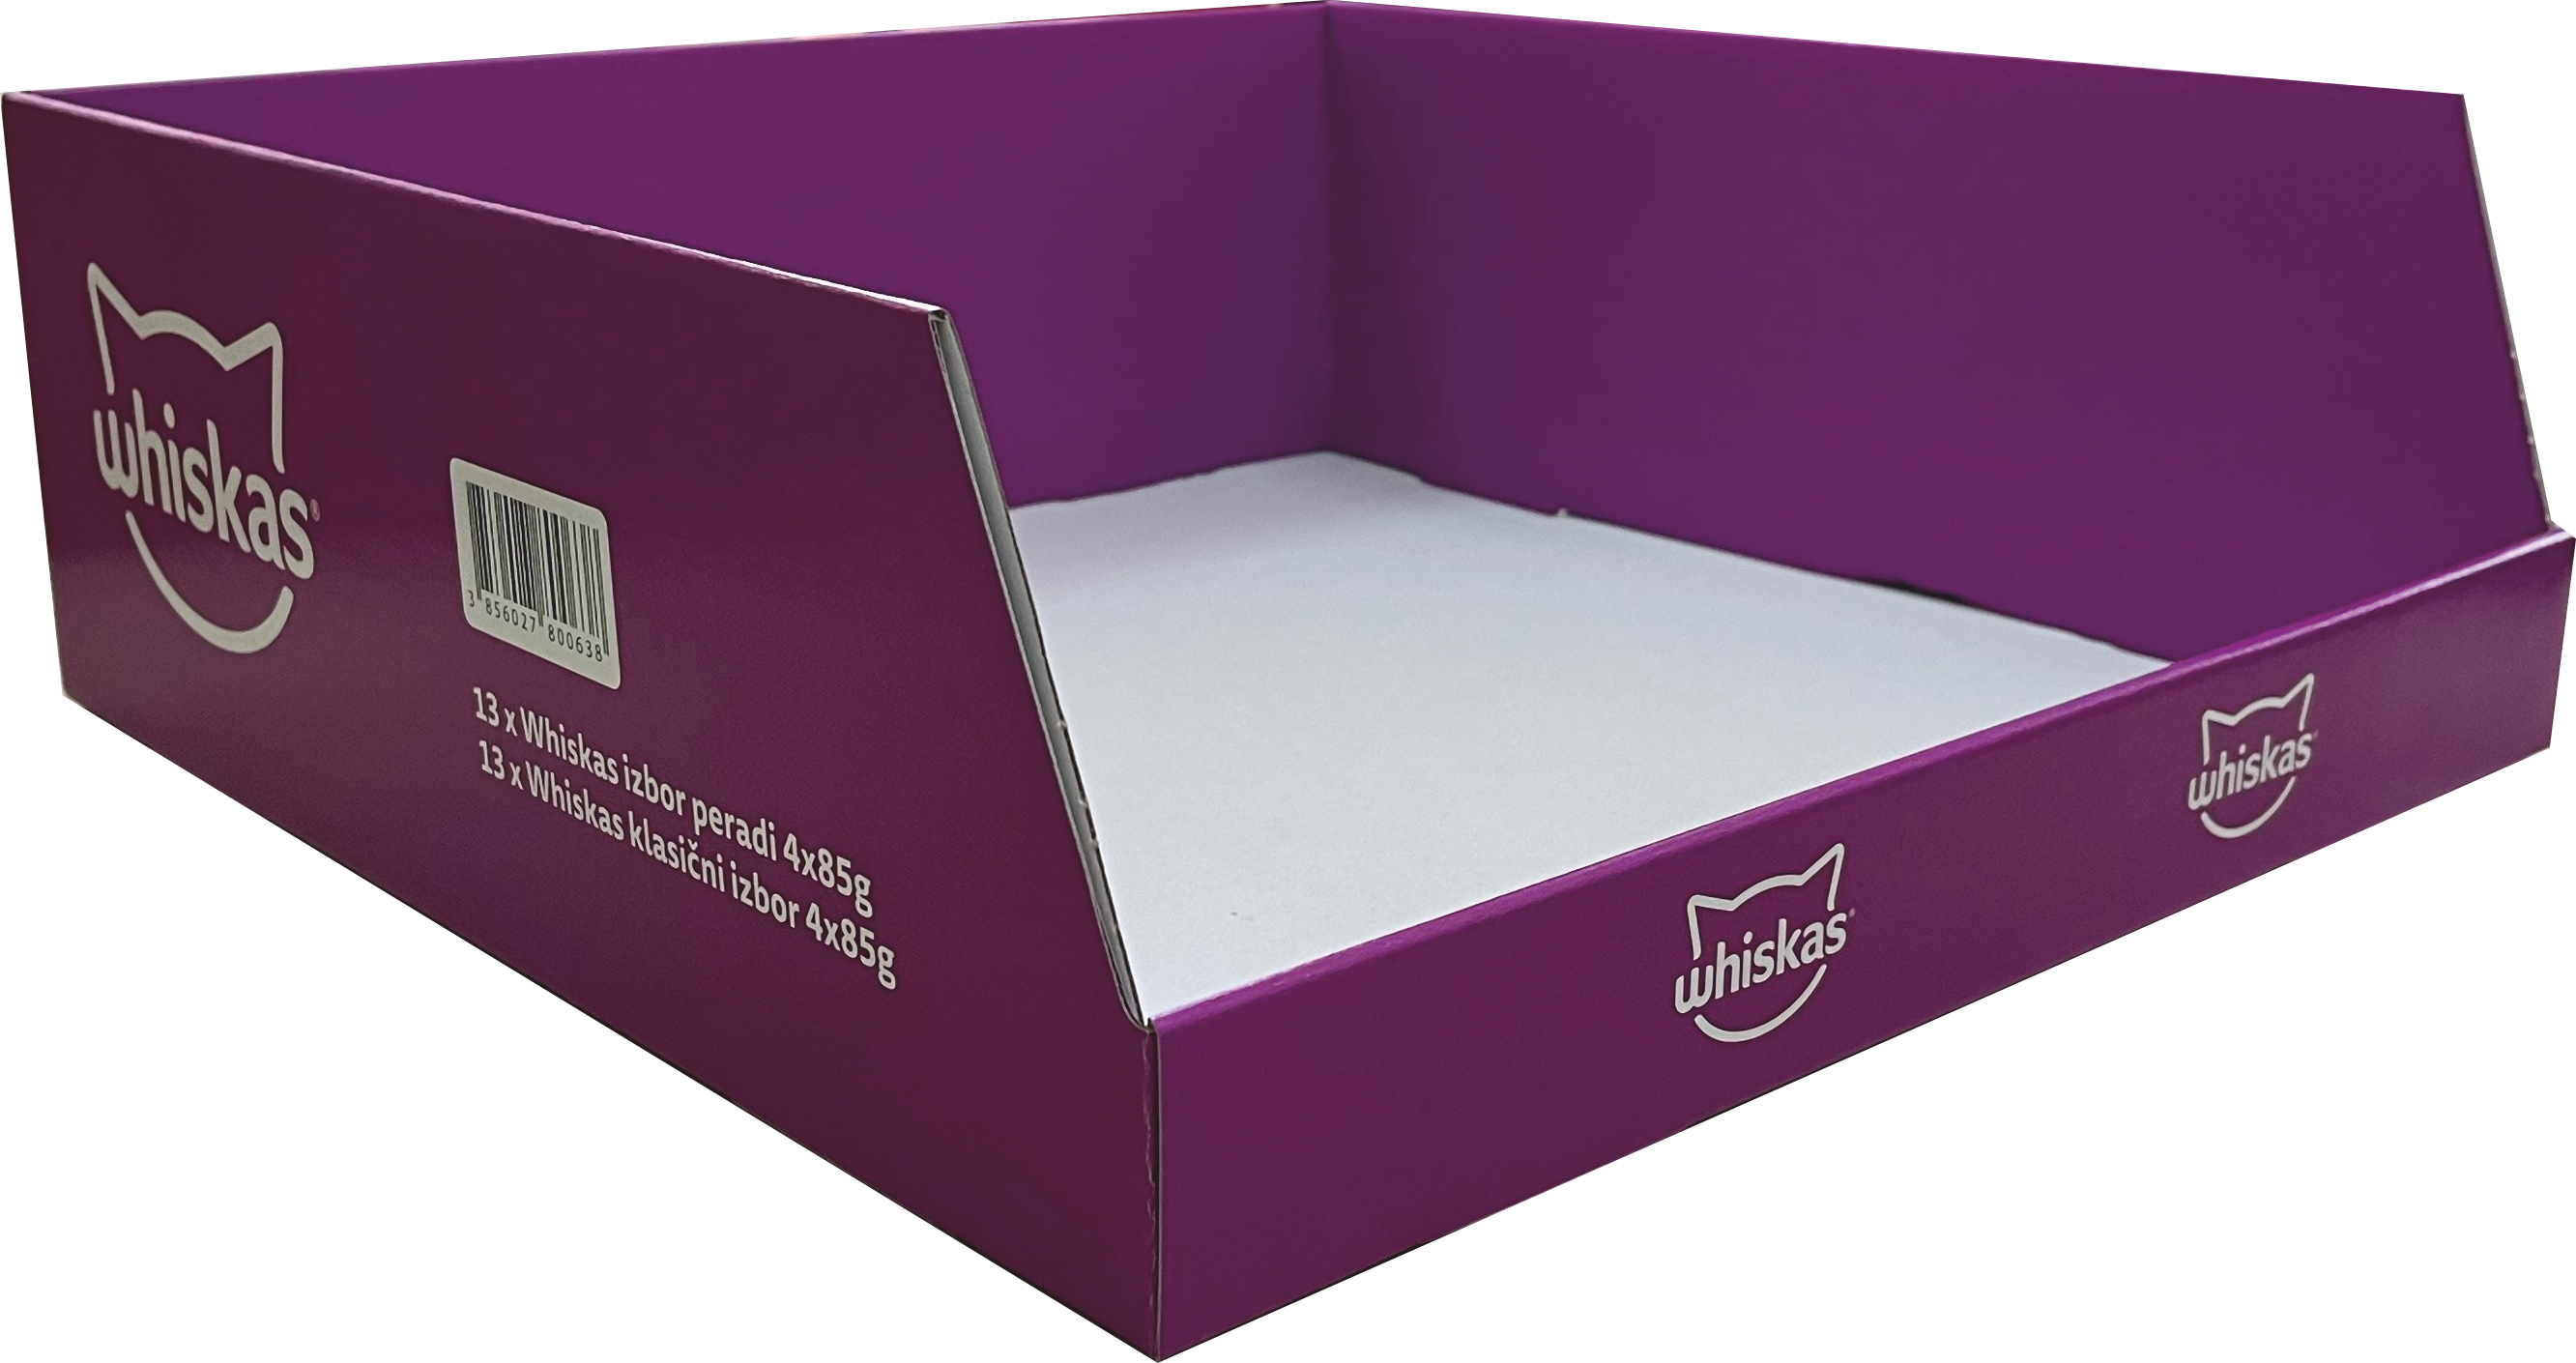 Shelf-ready kutije